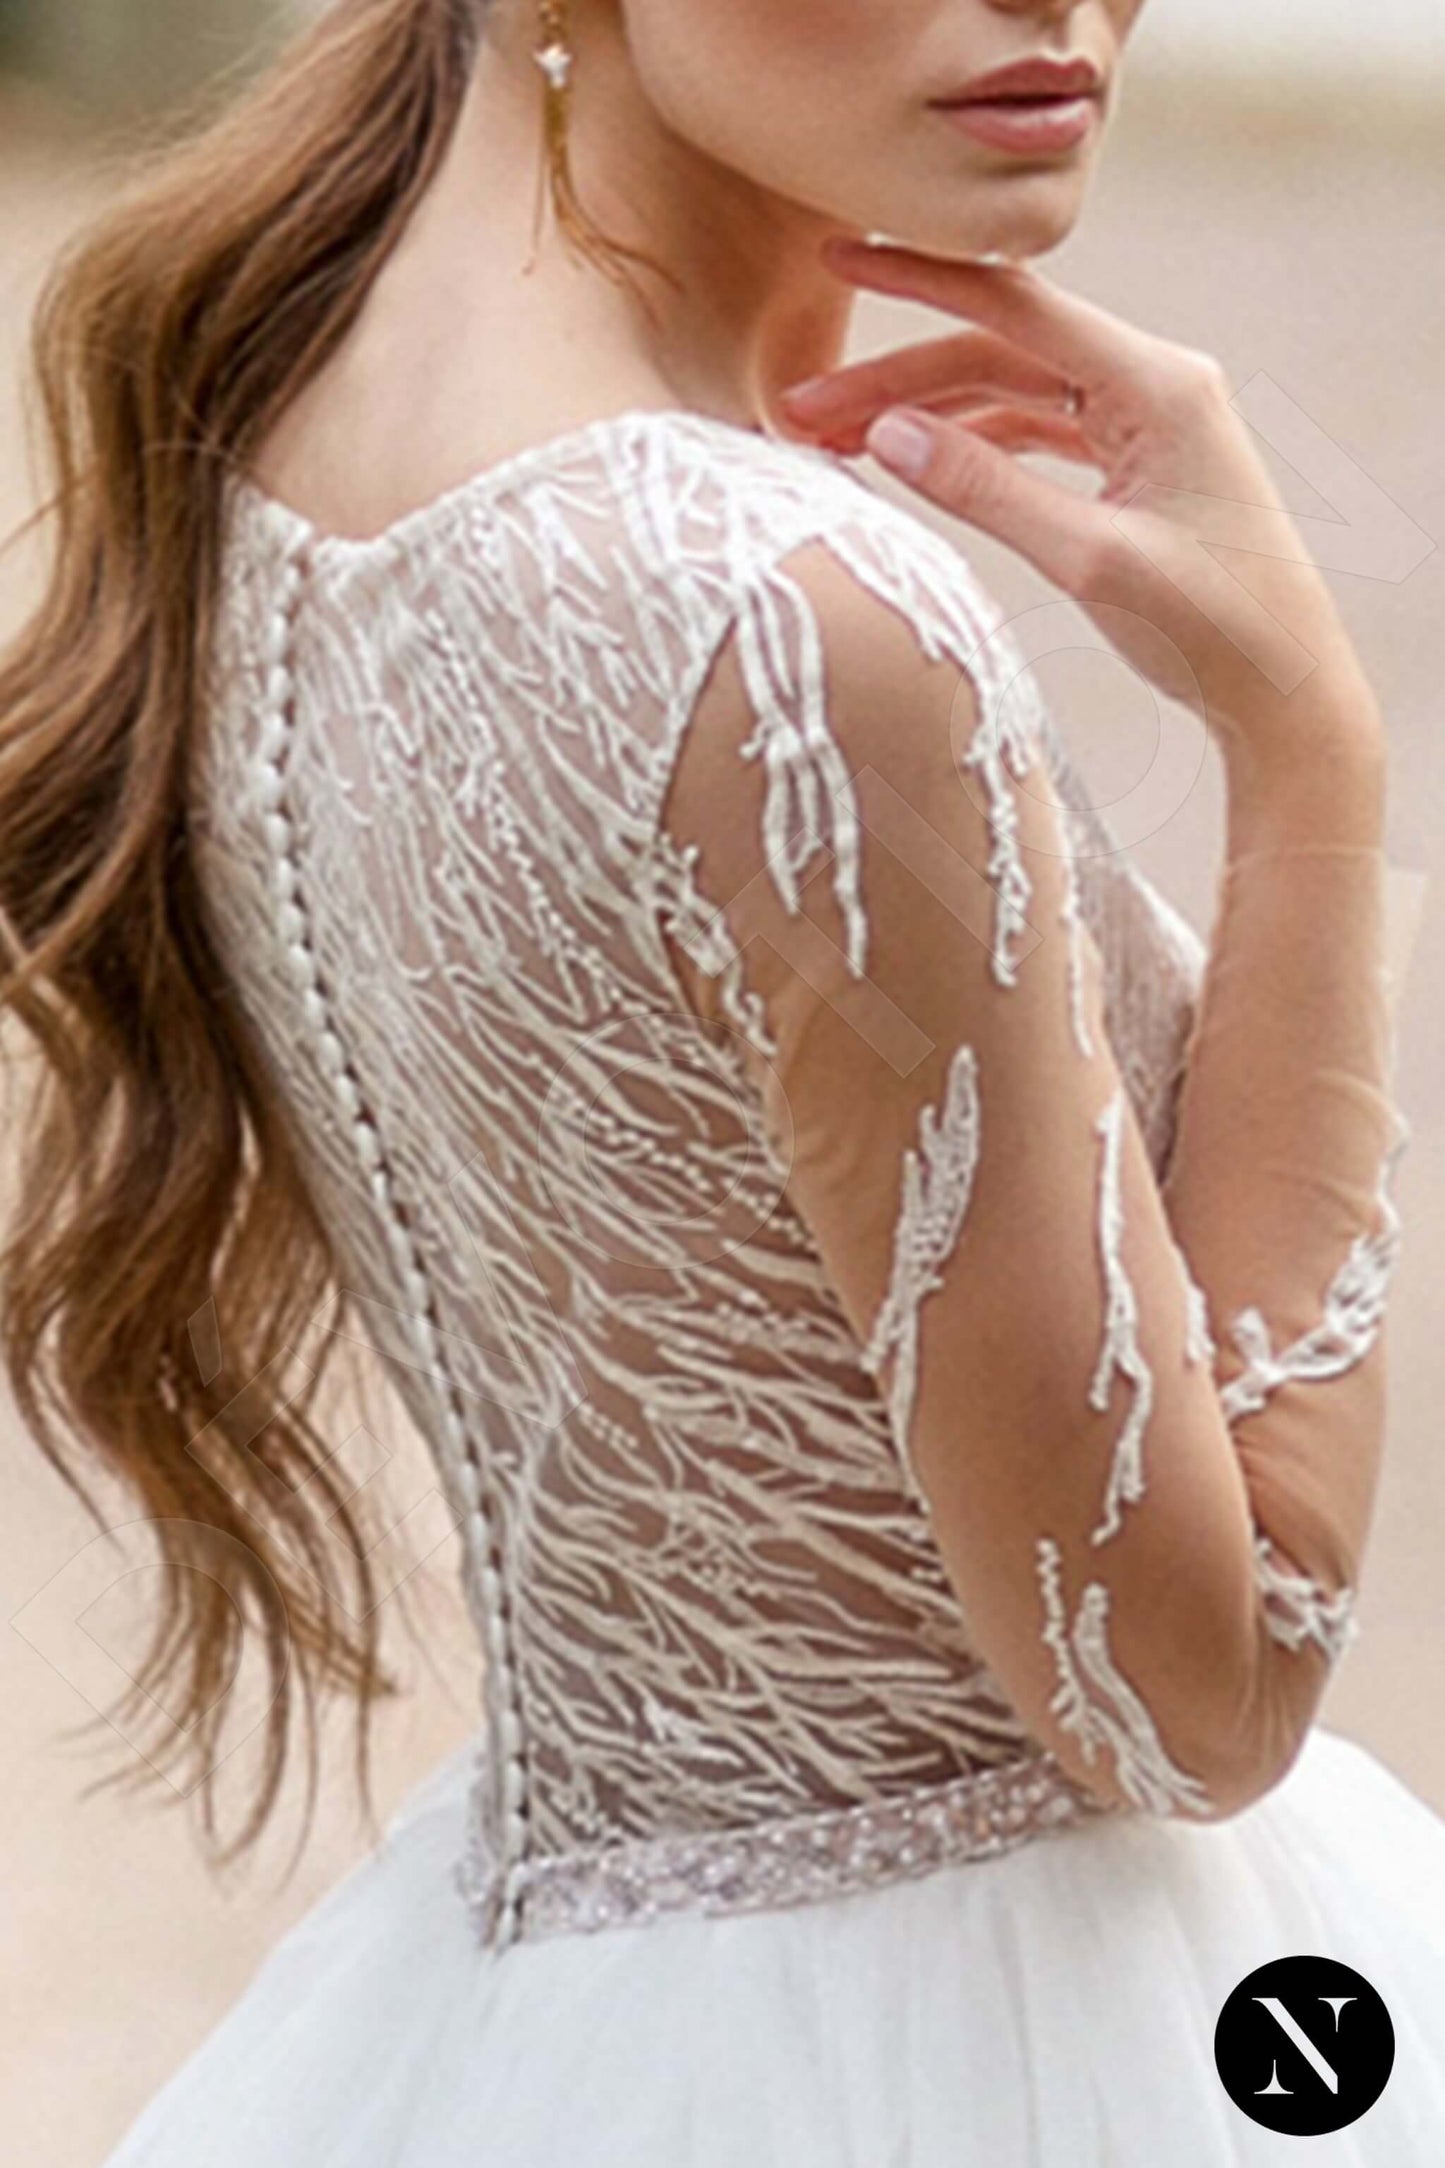 Nermesia Full back Princess/Ball Gown Long sleeve Wedding Dress 4